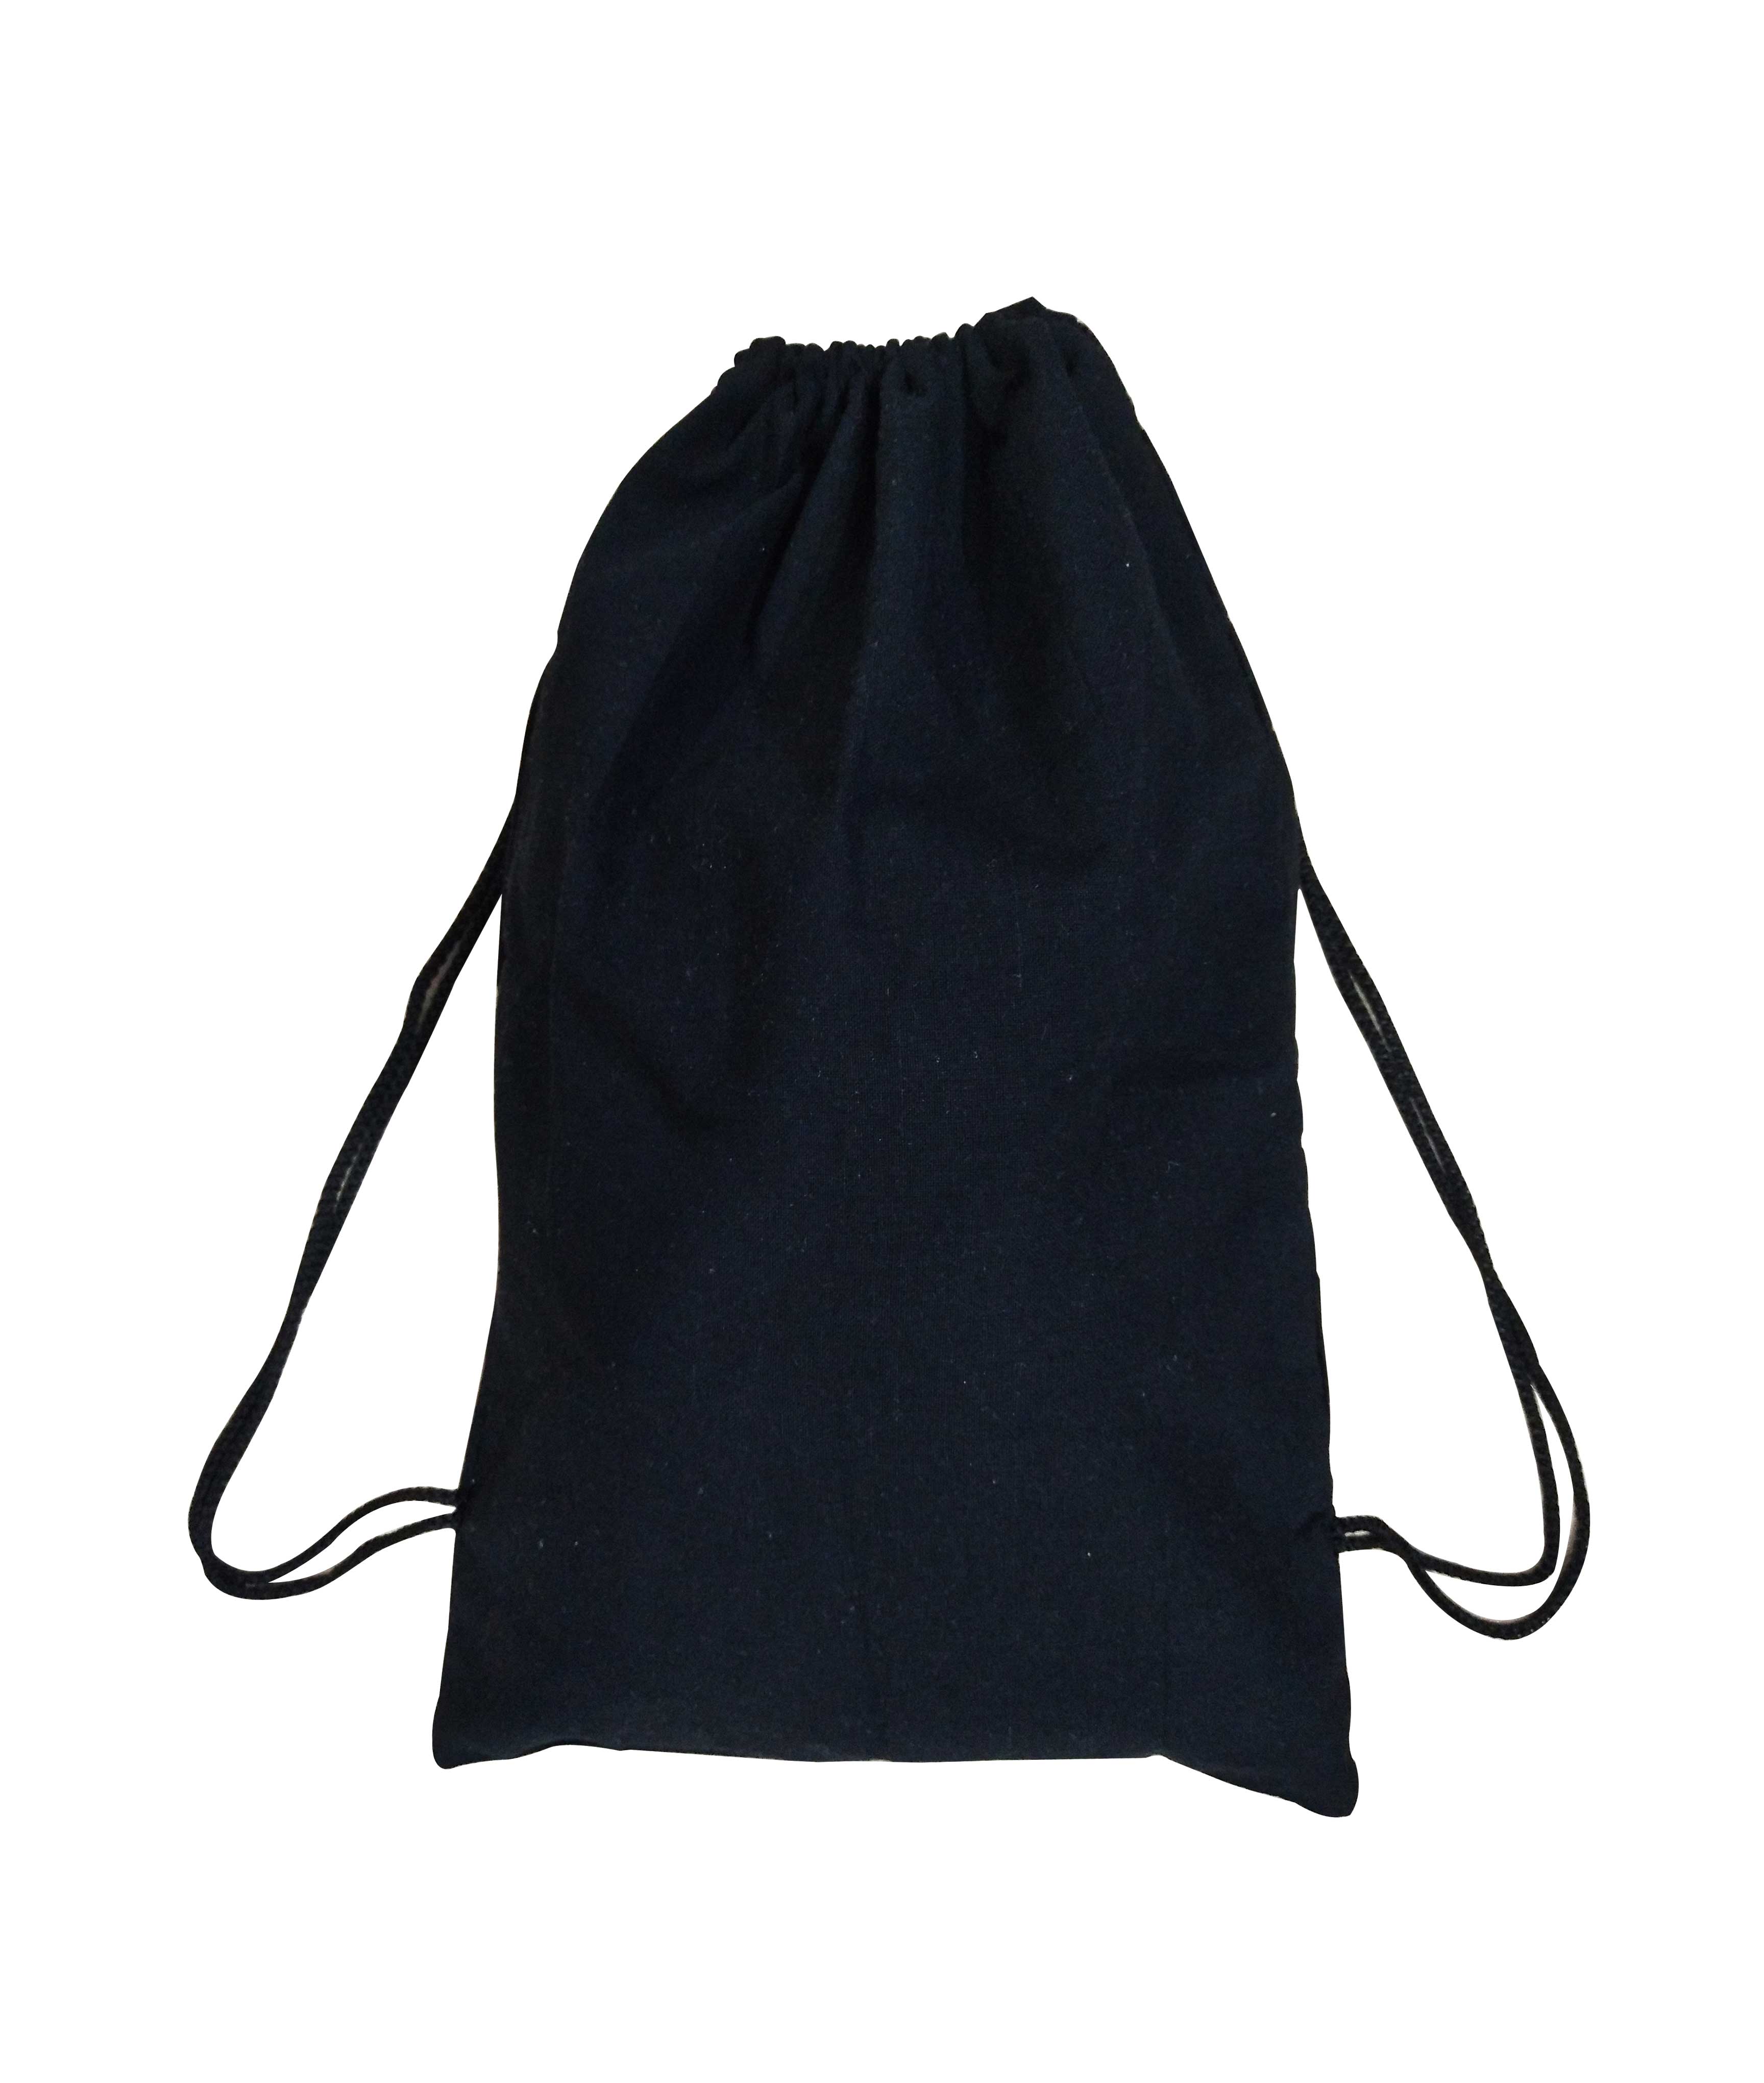 Buy The House of tara Handloom Purse For Women | Small Crossbody Sling Bag  with Waterproof Inner Lining, Tassels & Zip Pocket | Handcrafted Aesthetic  Foldable Ladies Purse Handbag (Grey Black) at